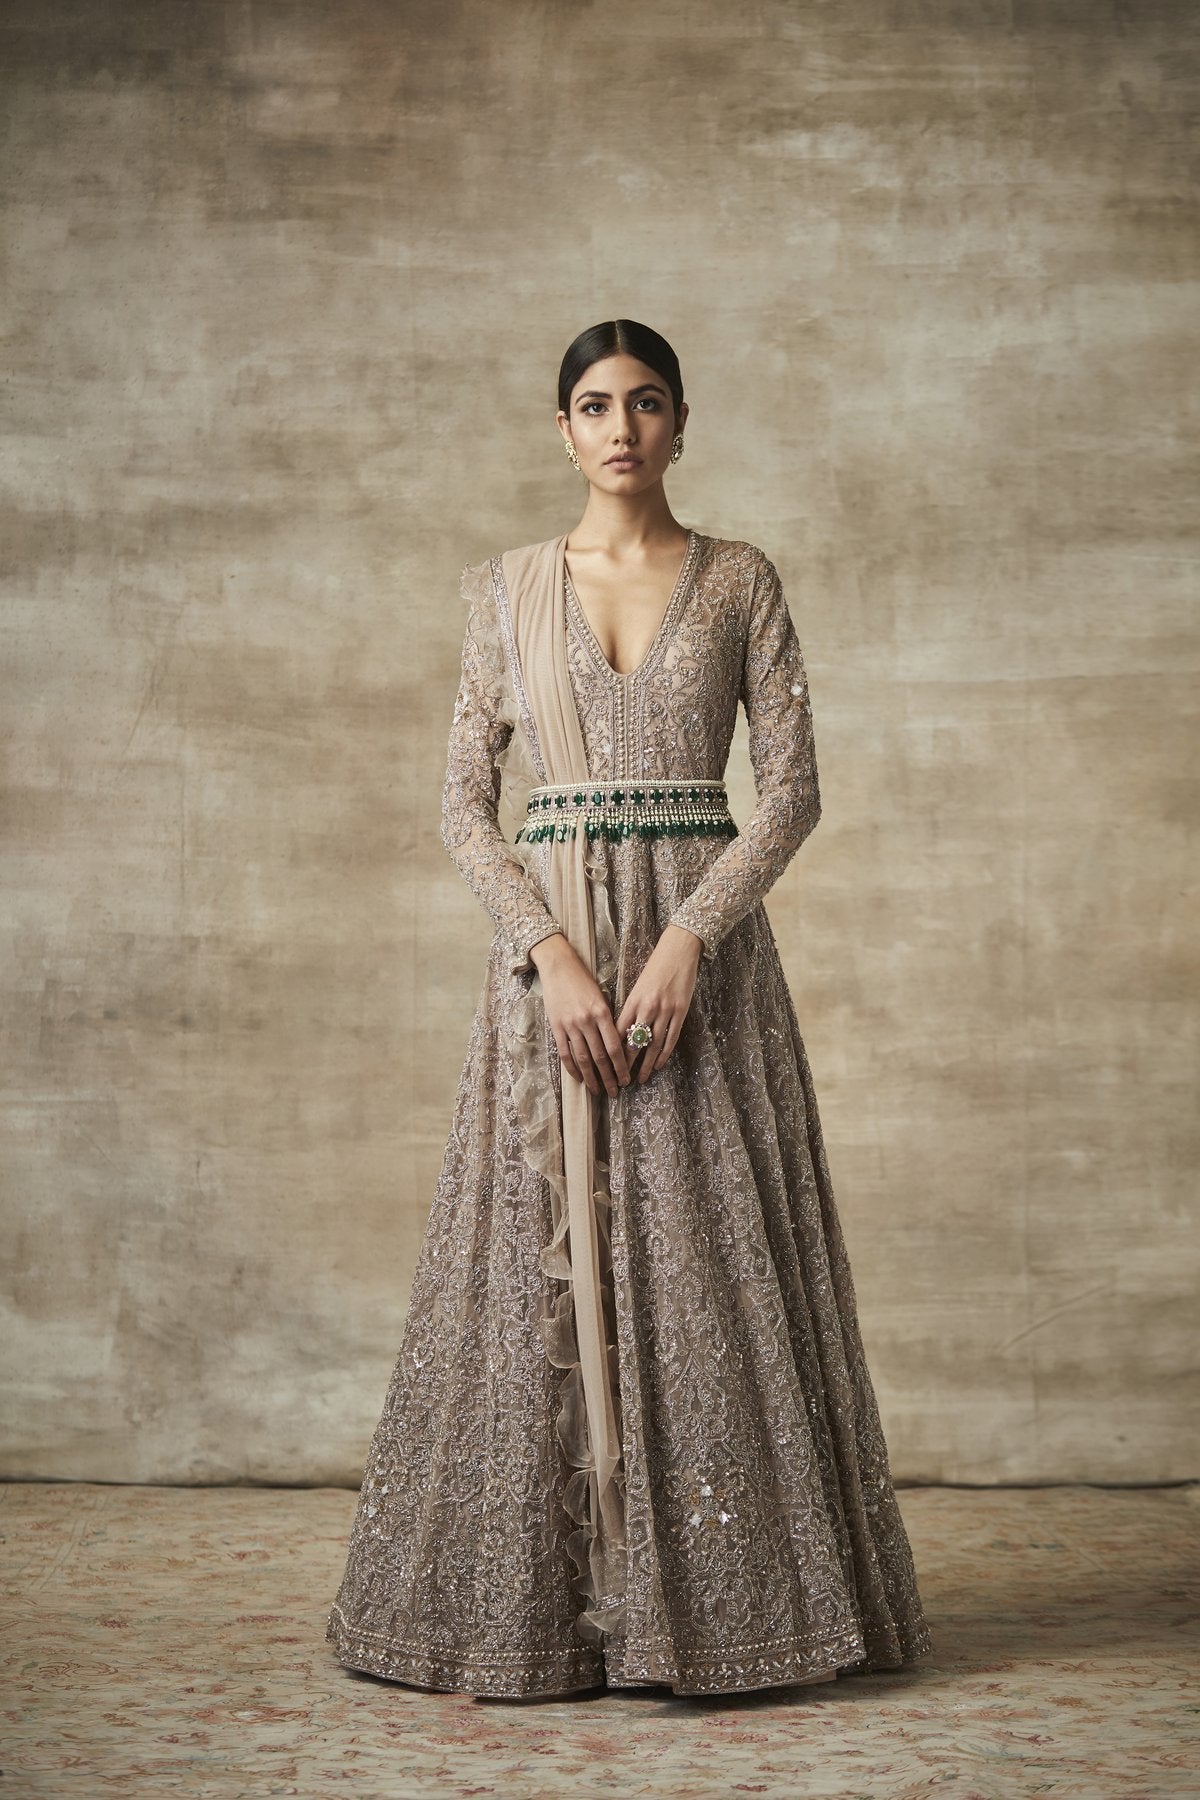 Boho Bliss: Floral Prints in Indo-Western Wedding Attire - Fashion Info